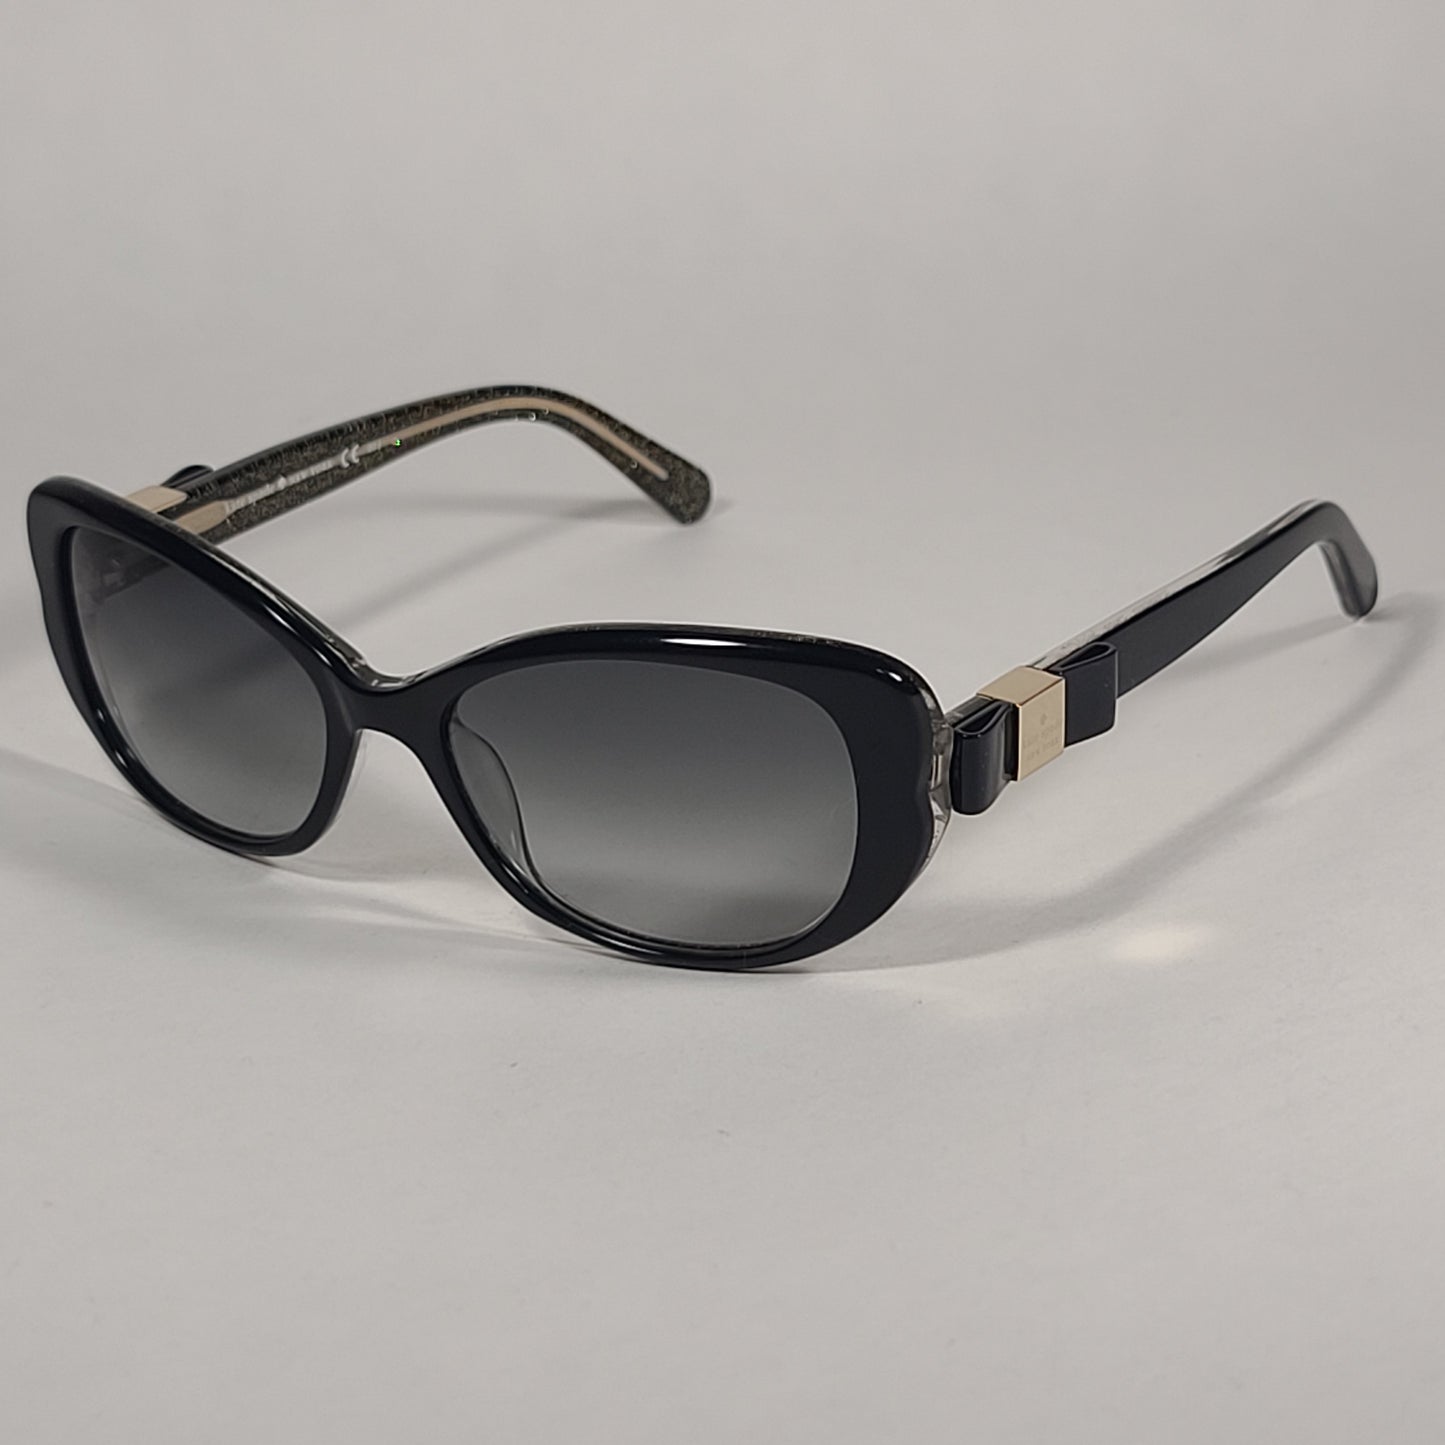 Kate Spade Chandra/s PEUF8 Flat Oval Sunglasses Black Gold Glitter Gray Gradient Lens - Sunglasses